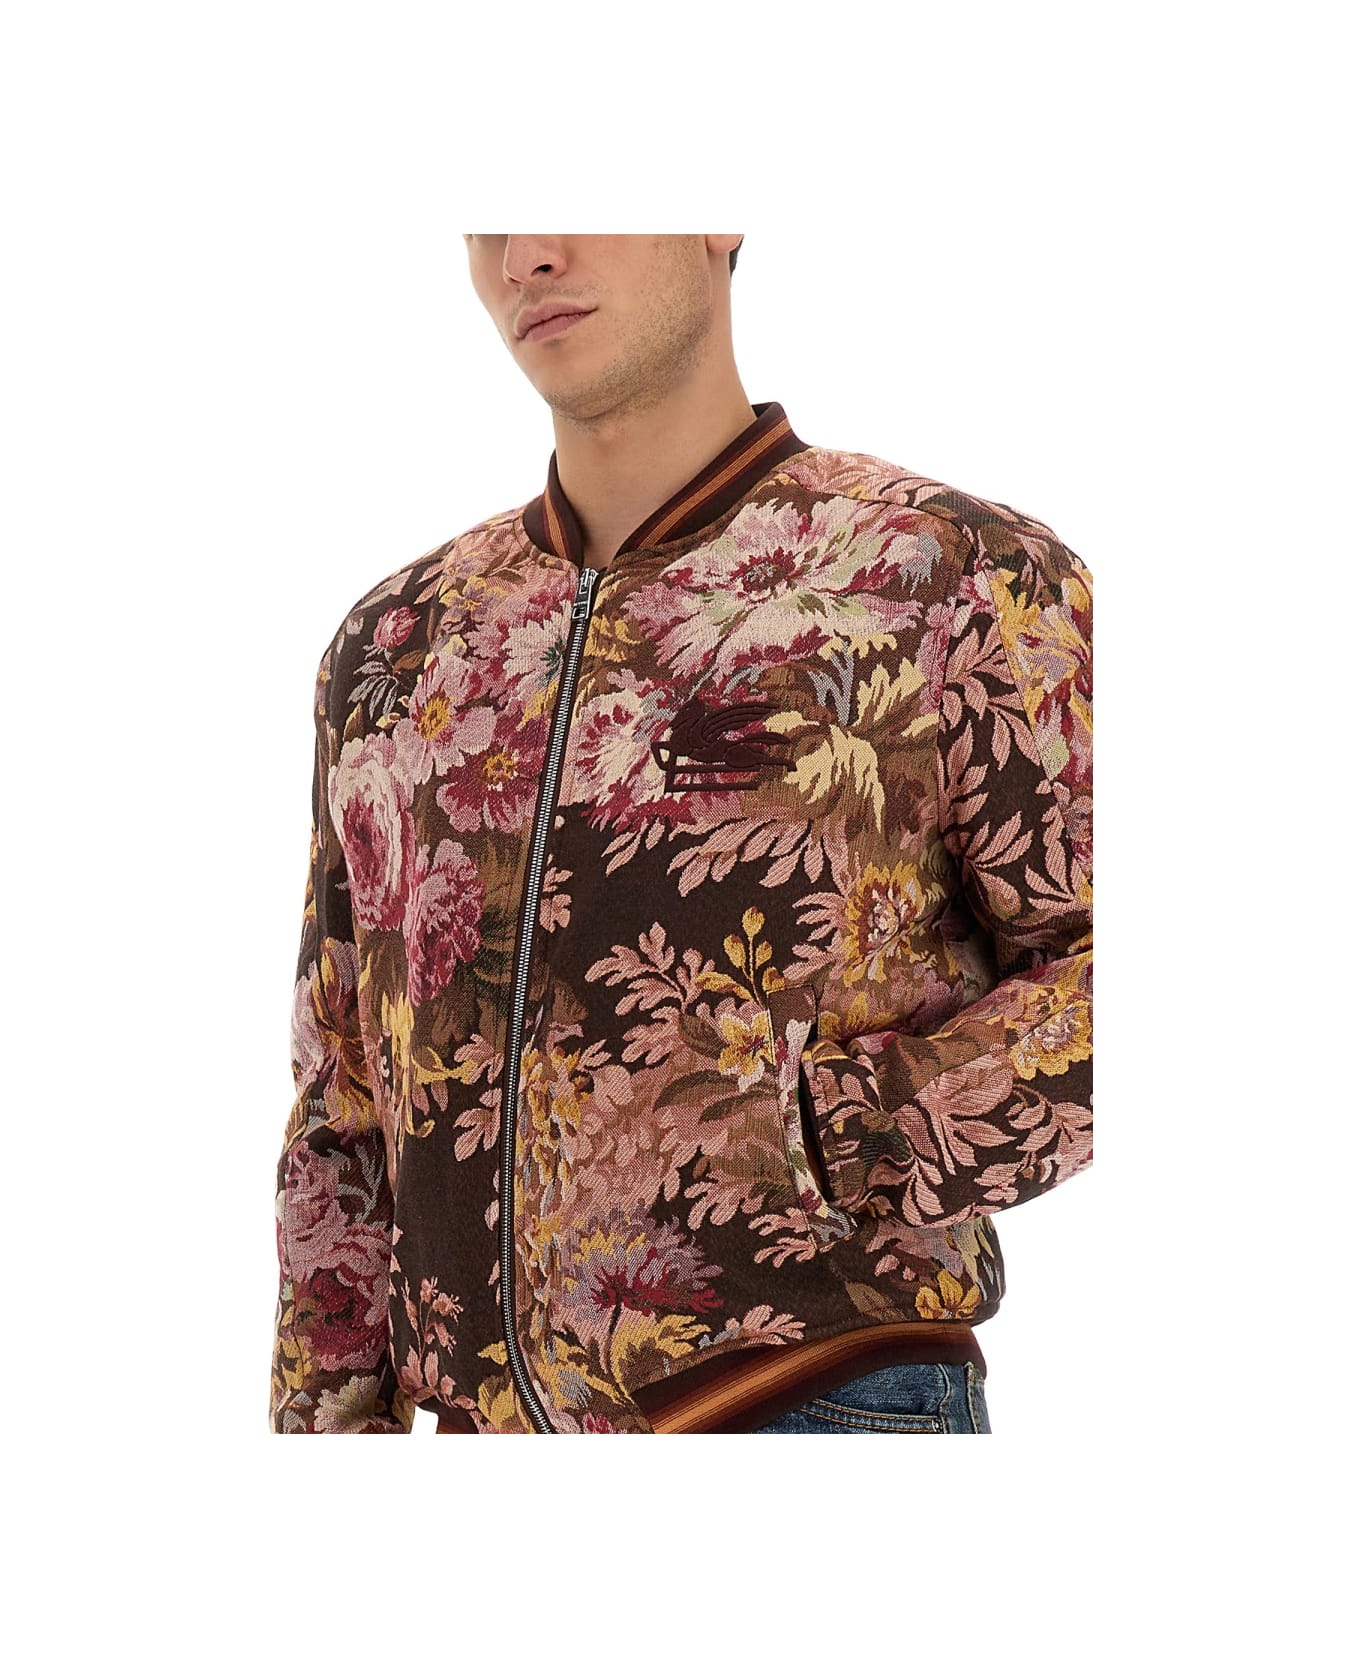 Etro Floral Print Bomber Jacket - BROWN